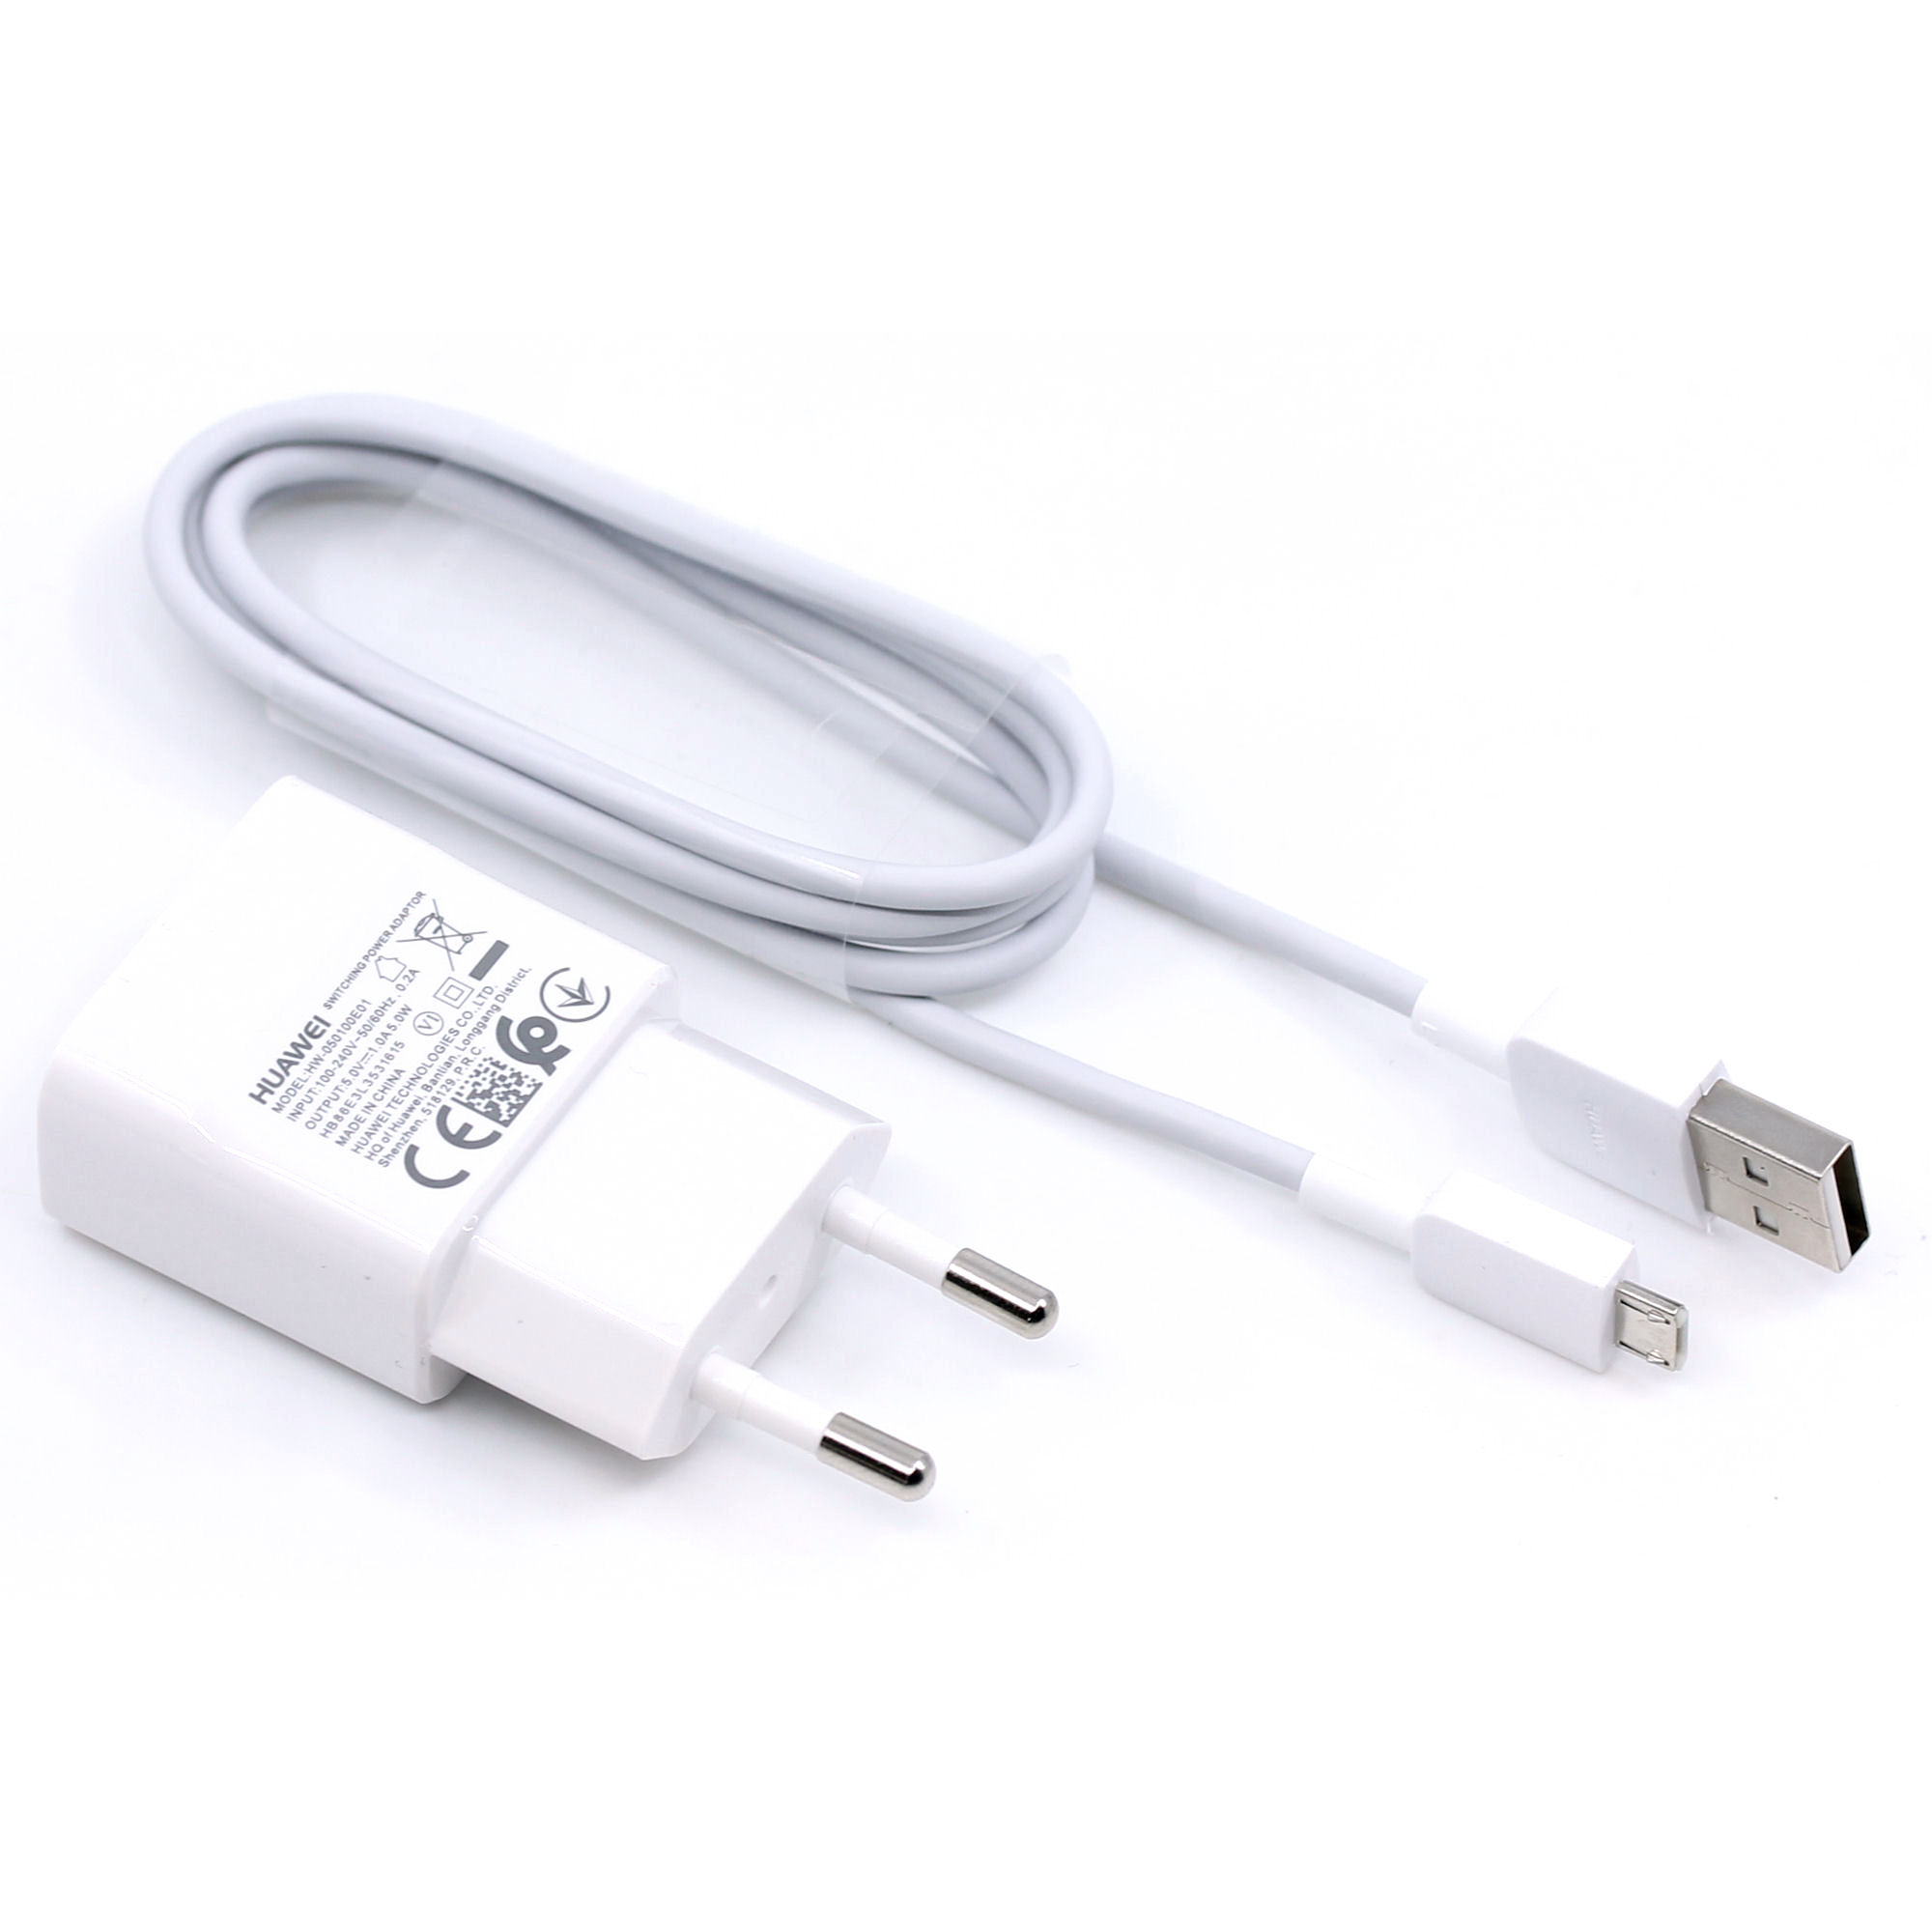 Huawei Ladegerät HW-050100E01 1A Micro-USB mit Kabel weiß